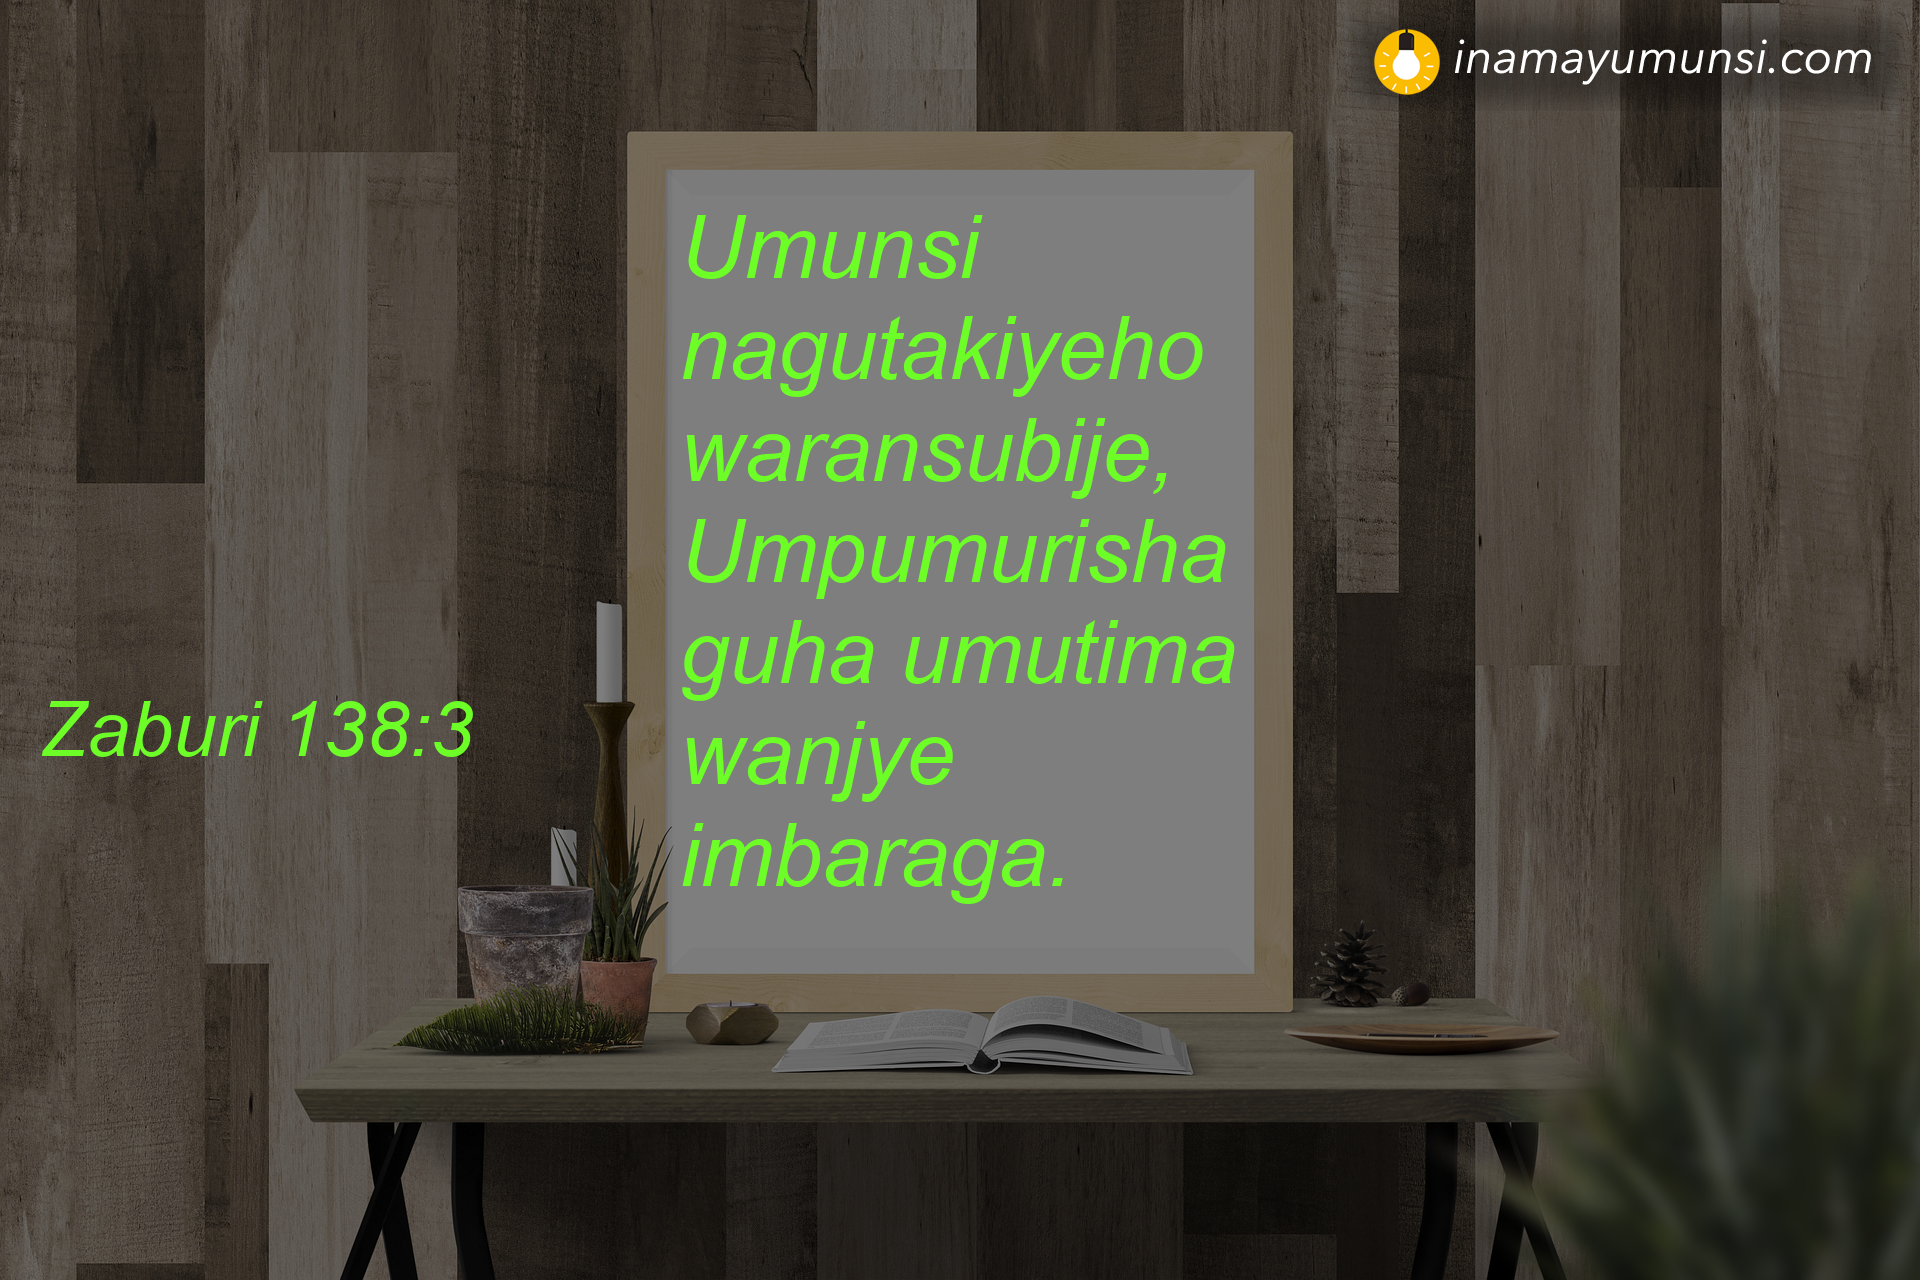 Zaburi 138:3 ⇒ Umunsi nagutakiyeho waransubije, Umpumurisha guha umutima wanjye imbaraga.